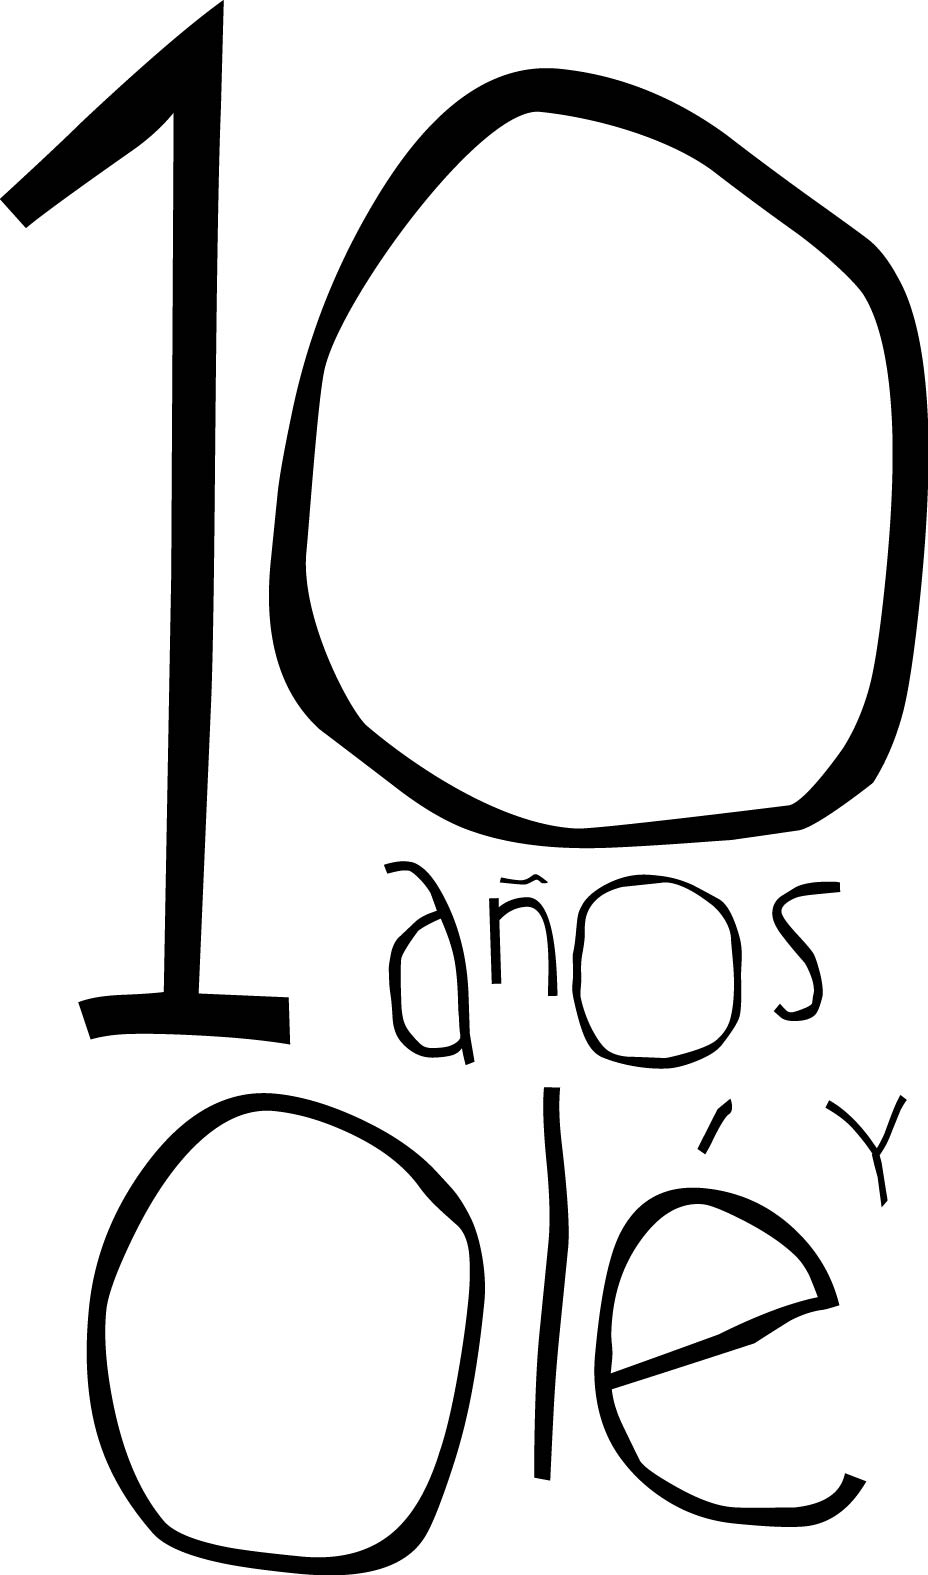 Logo 10 aniversario Negro.jpg